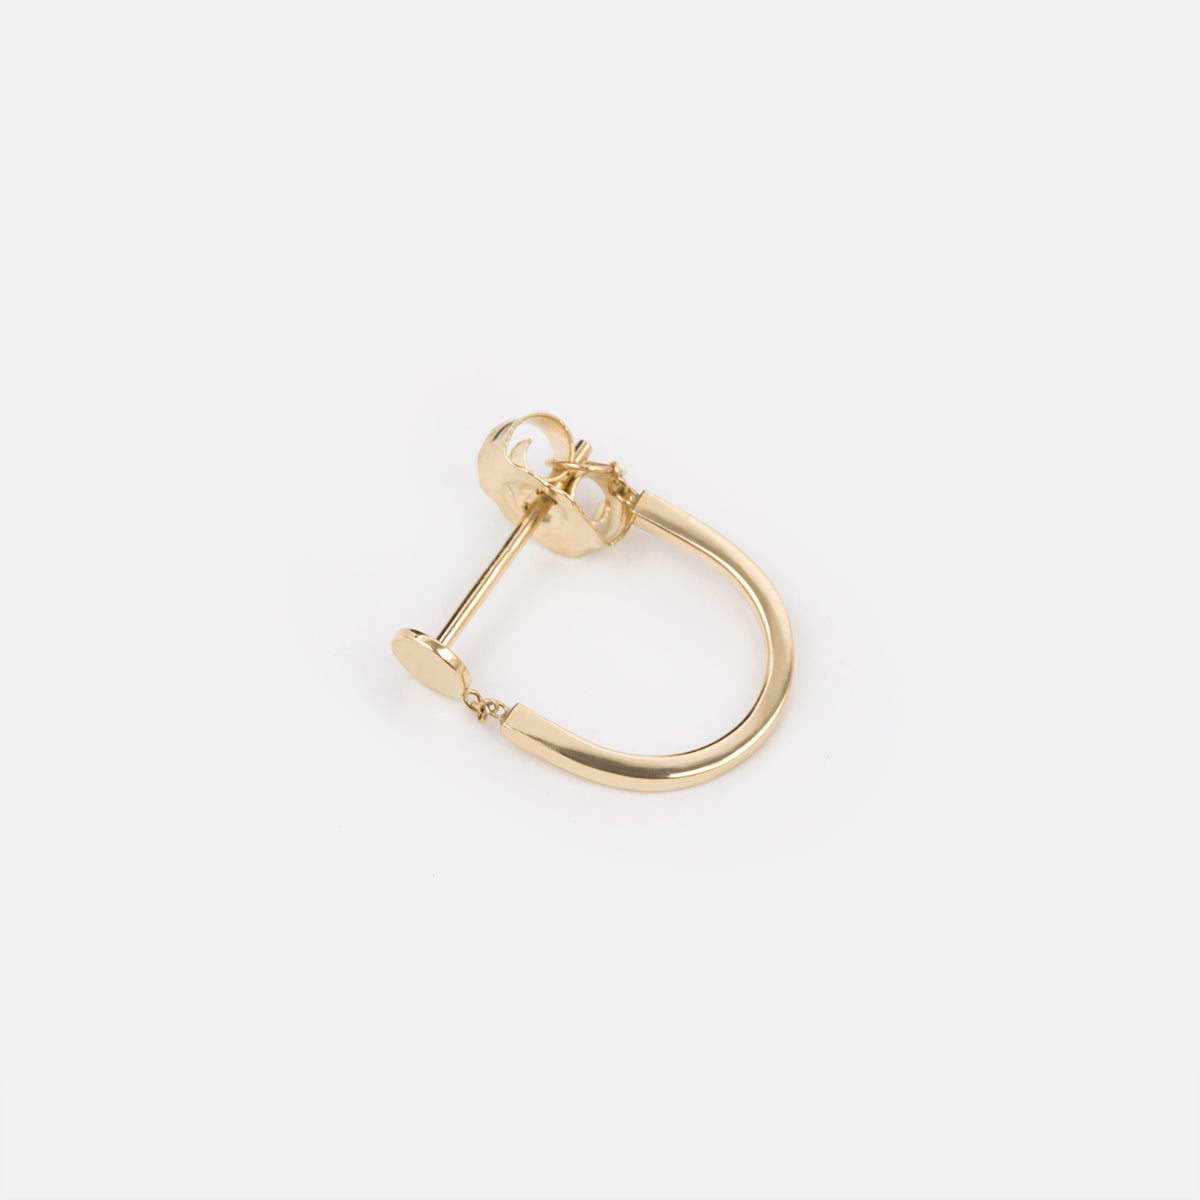 Mini Rita Handmade Hug Earring in 14k Gold By SHW Fine Jewelry New York City